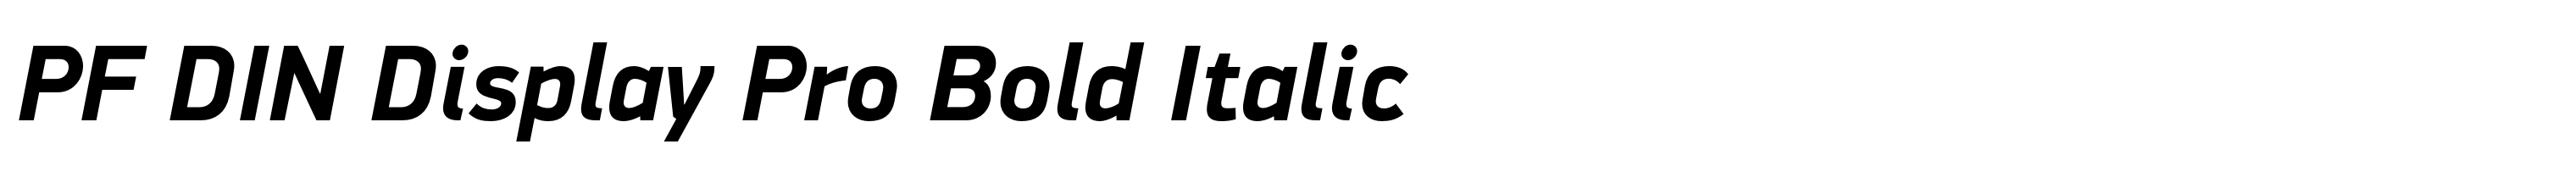 PF DIN Display Pro Bold Italic